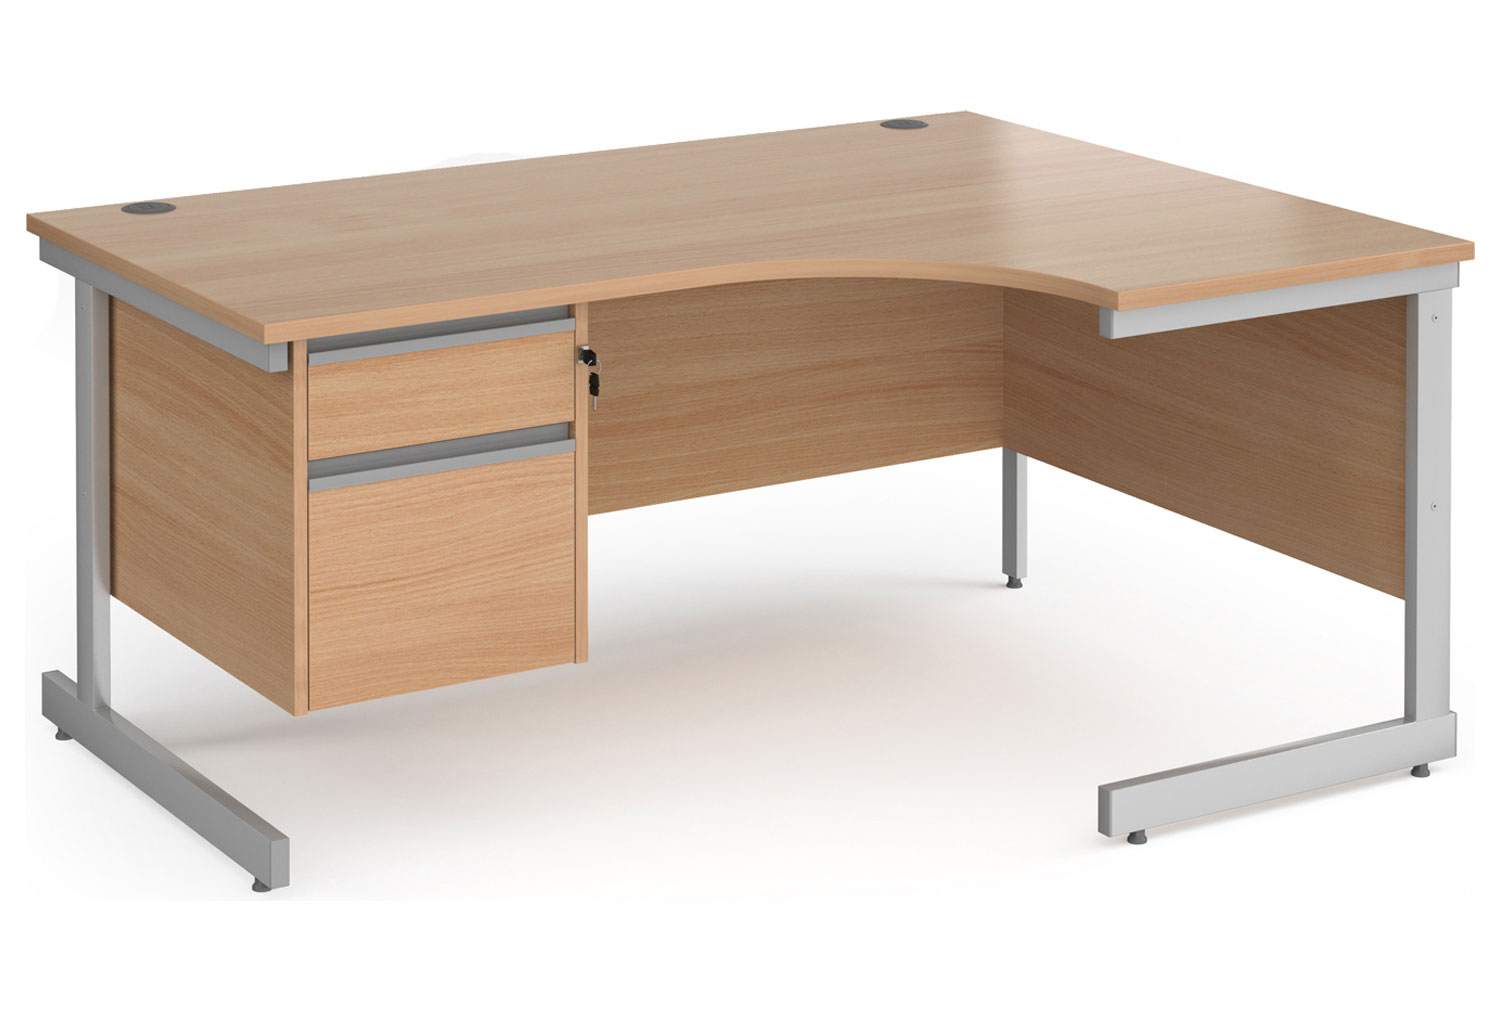 Value Line Classic+ C-Leg Right Ergo Office Desk 2 Drawers (Silver Leg), 160wx120/80dx73h (cm), Beech